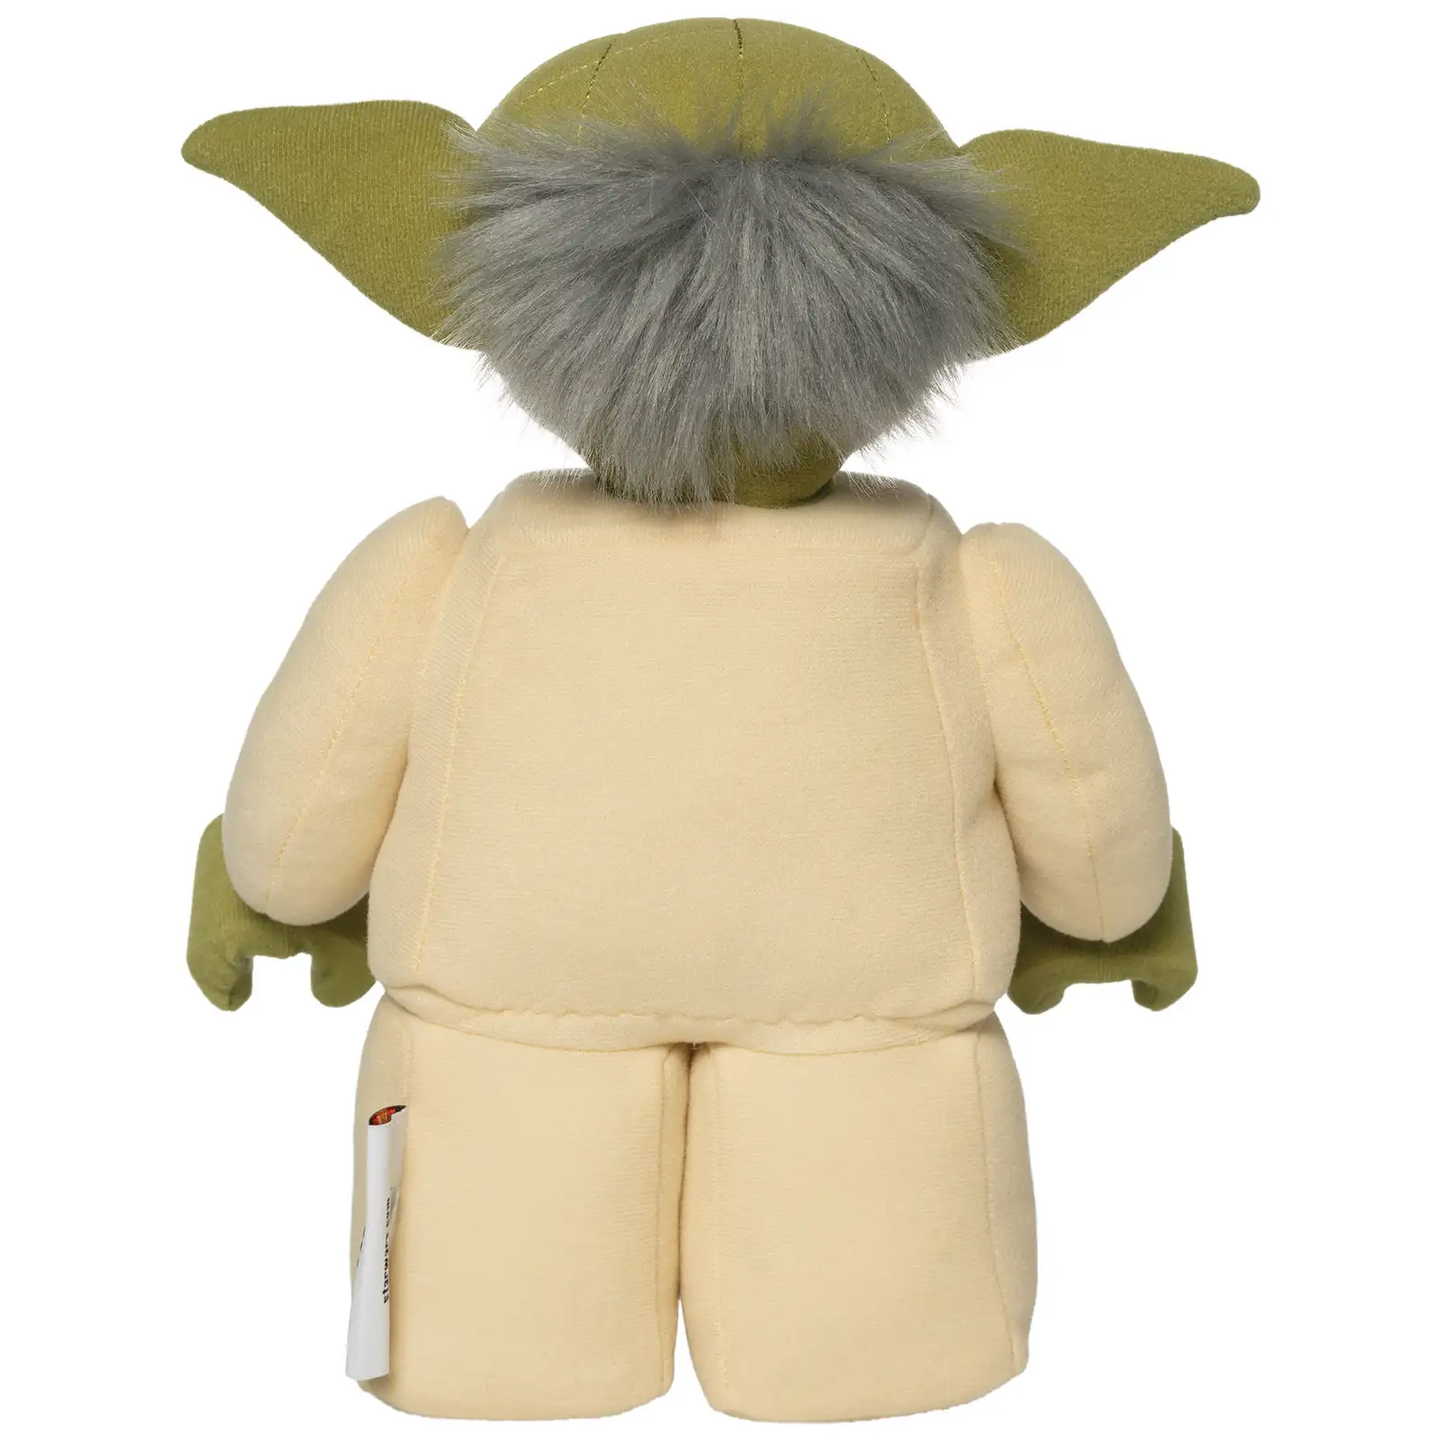 Lego Star Wars Yoda Stuffed Animal